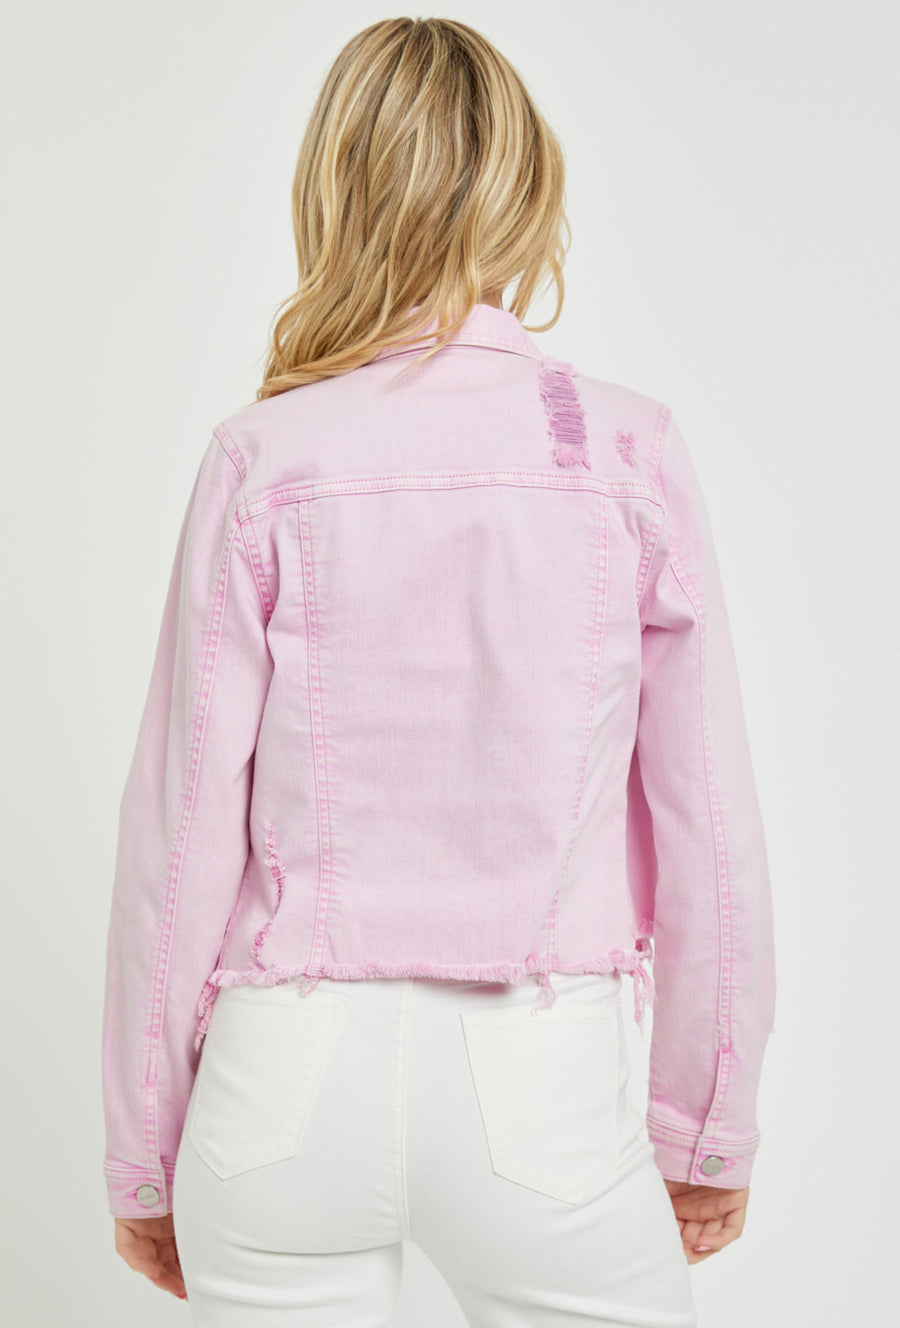 Risen Stretchy Acid Wash Pink Jacket